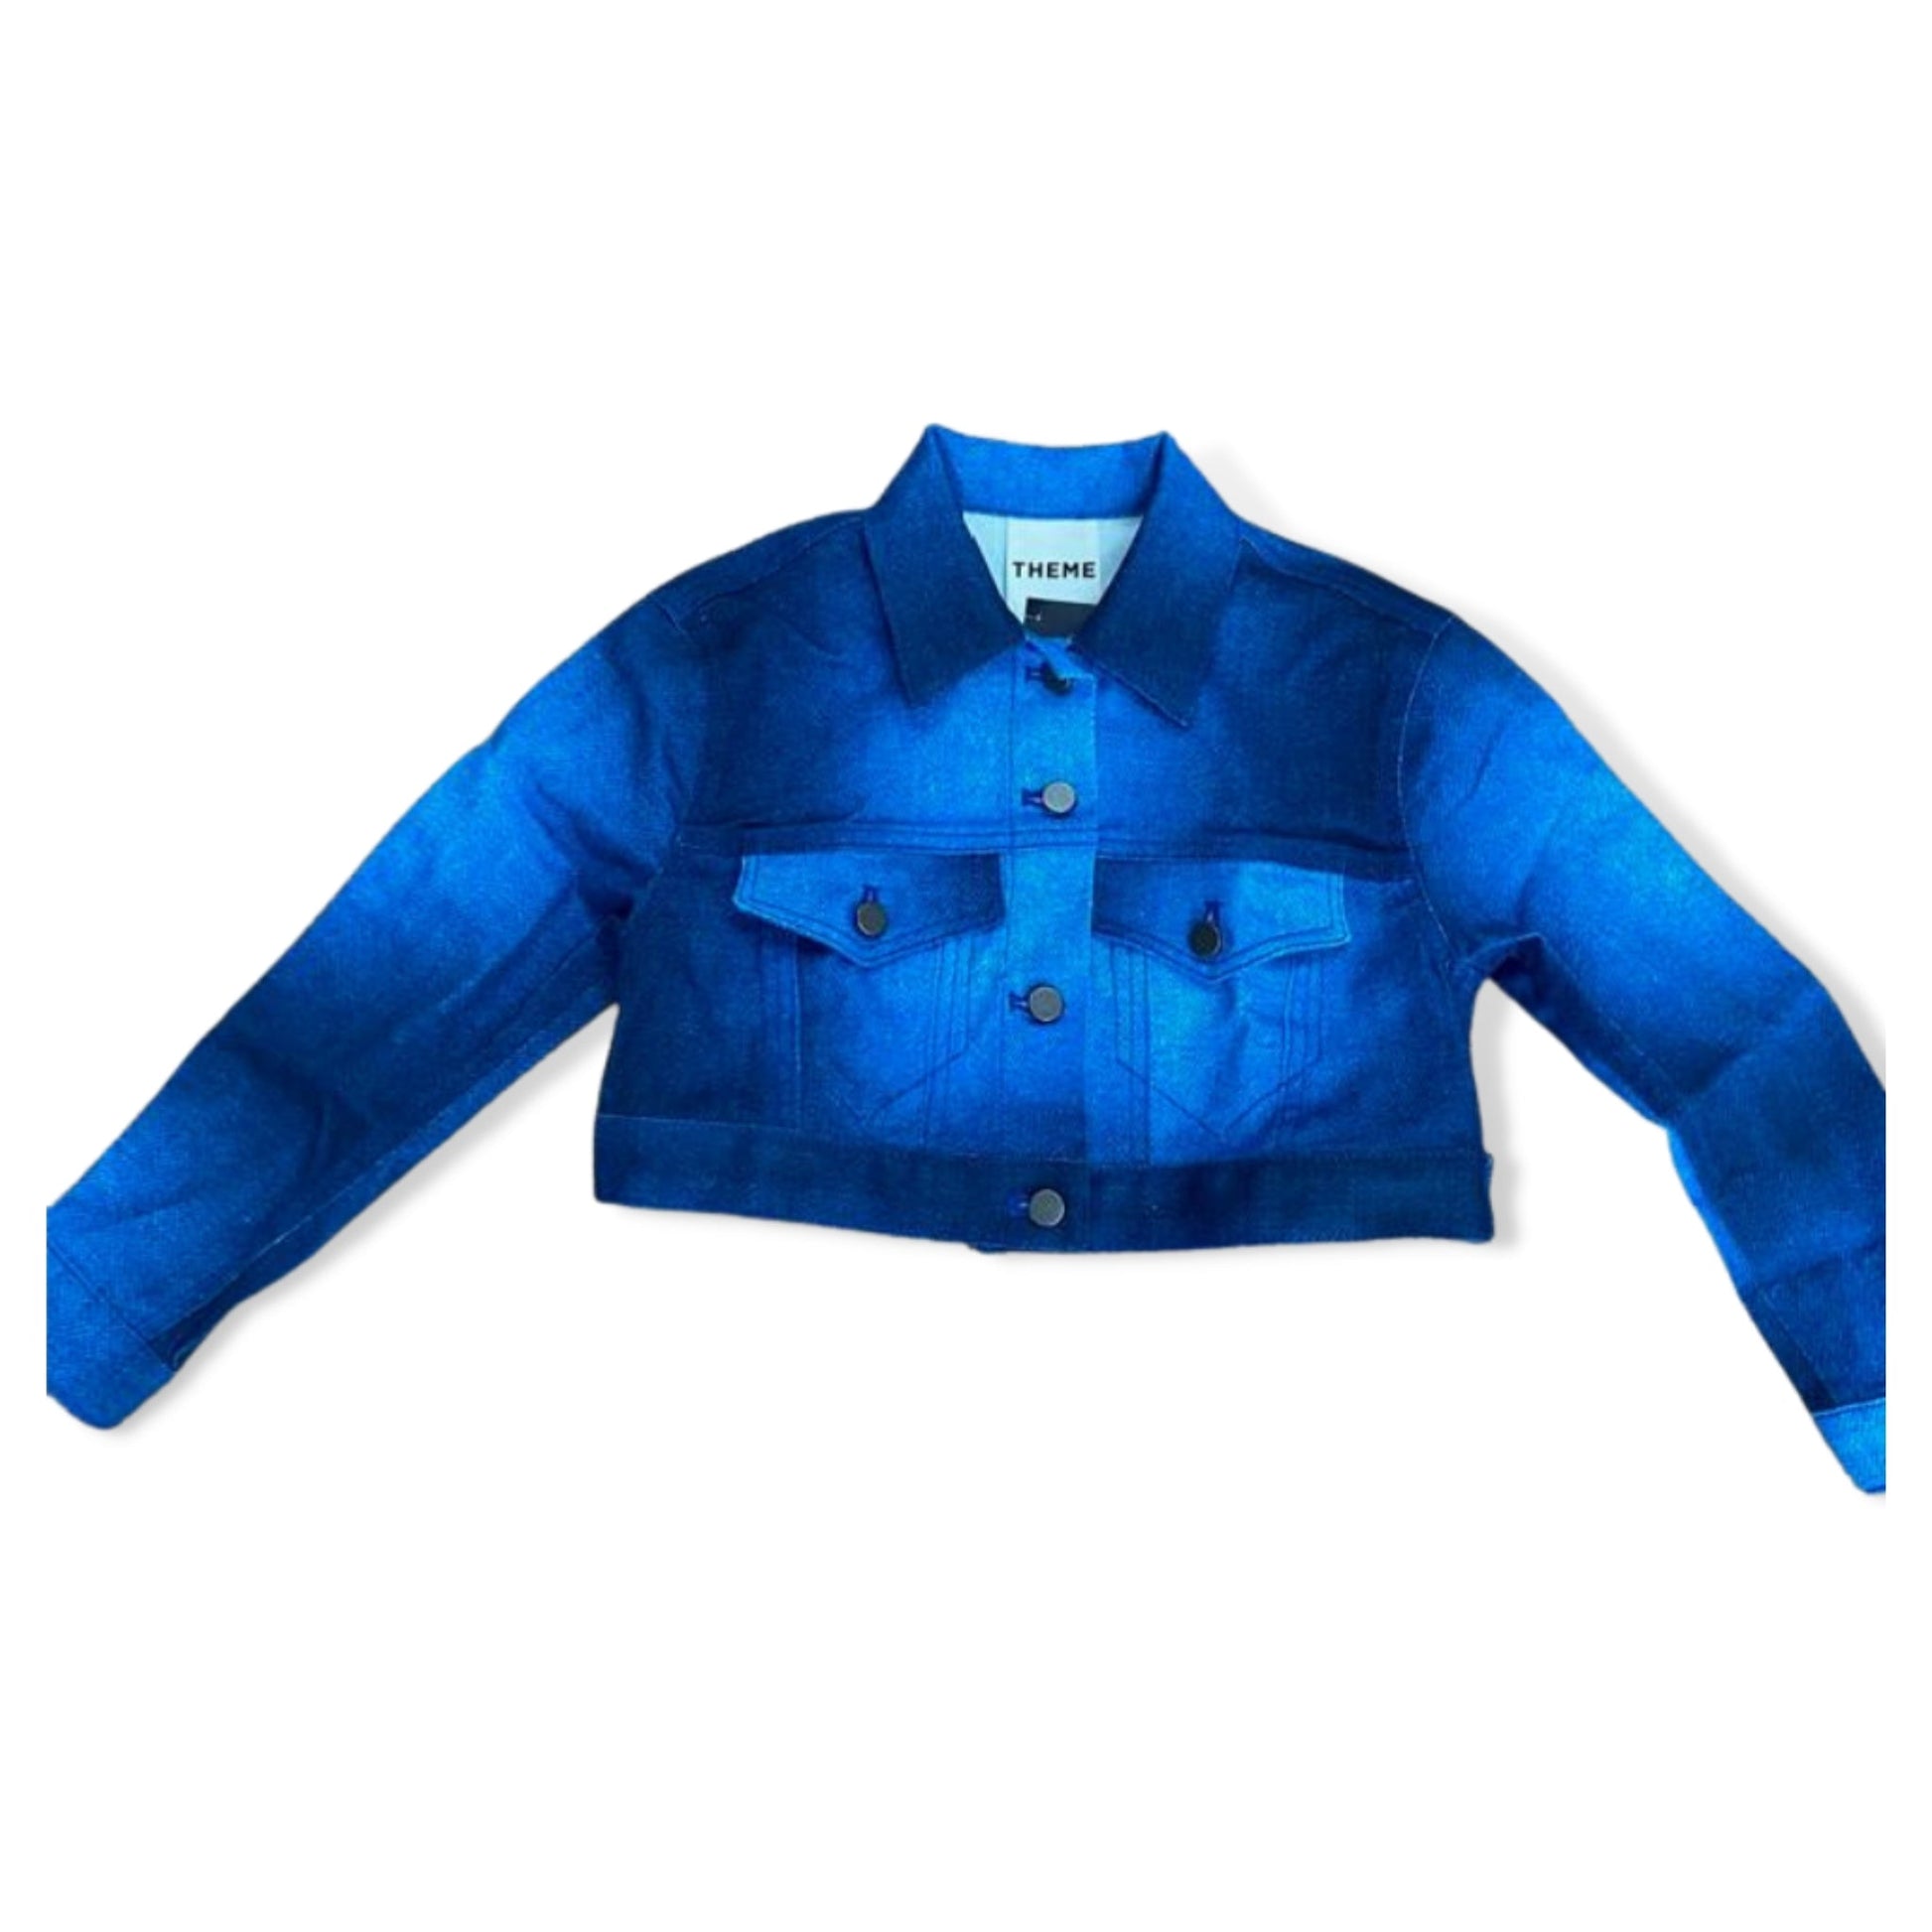 Theme Vintage Blue Jean The Crosby Cropped Denim Jacket - a Spirit Animal - Jacket $90-$120 active August 2023 Apparel